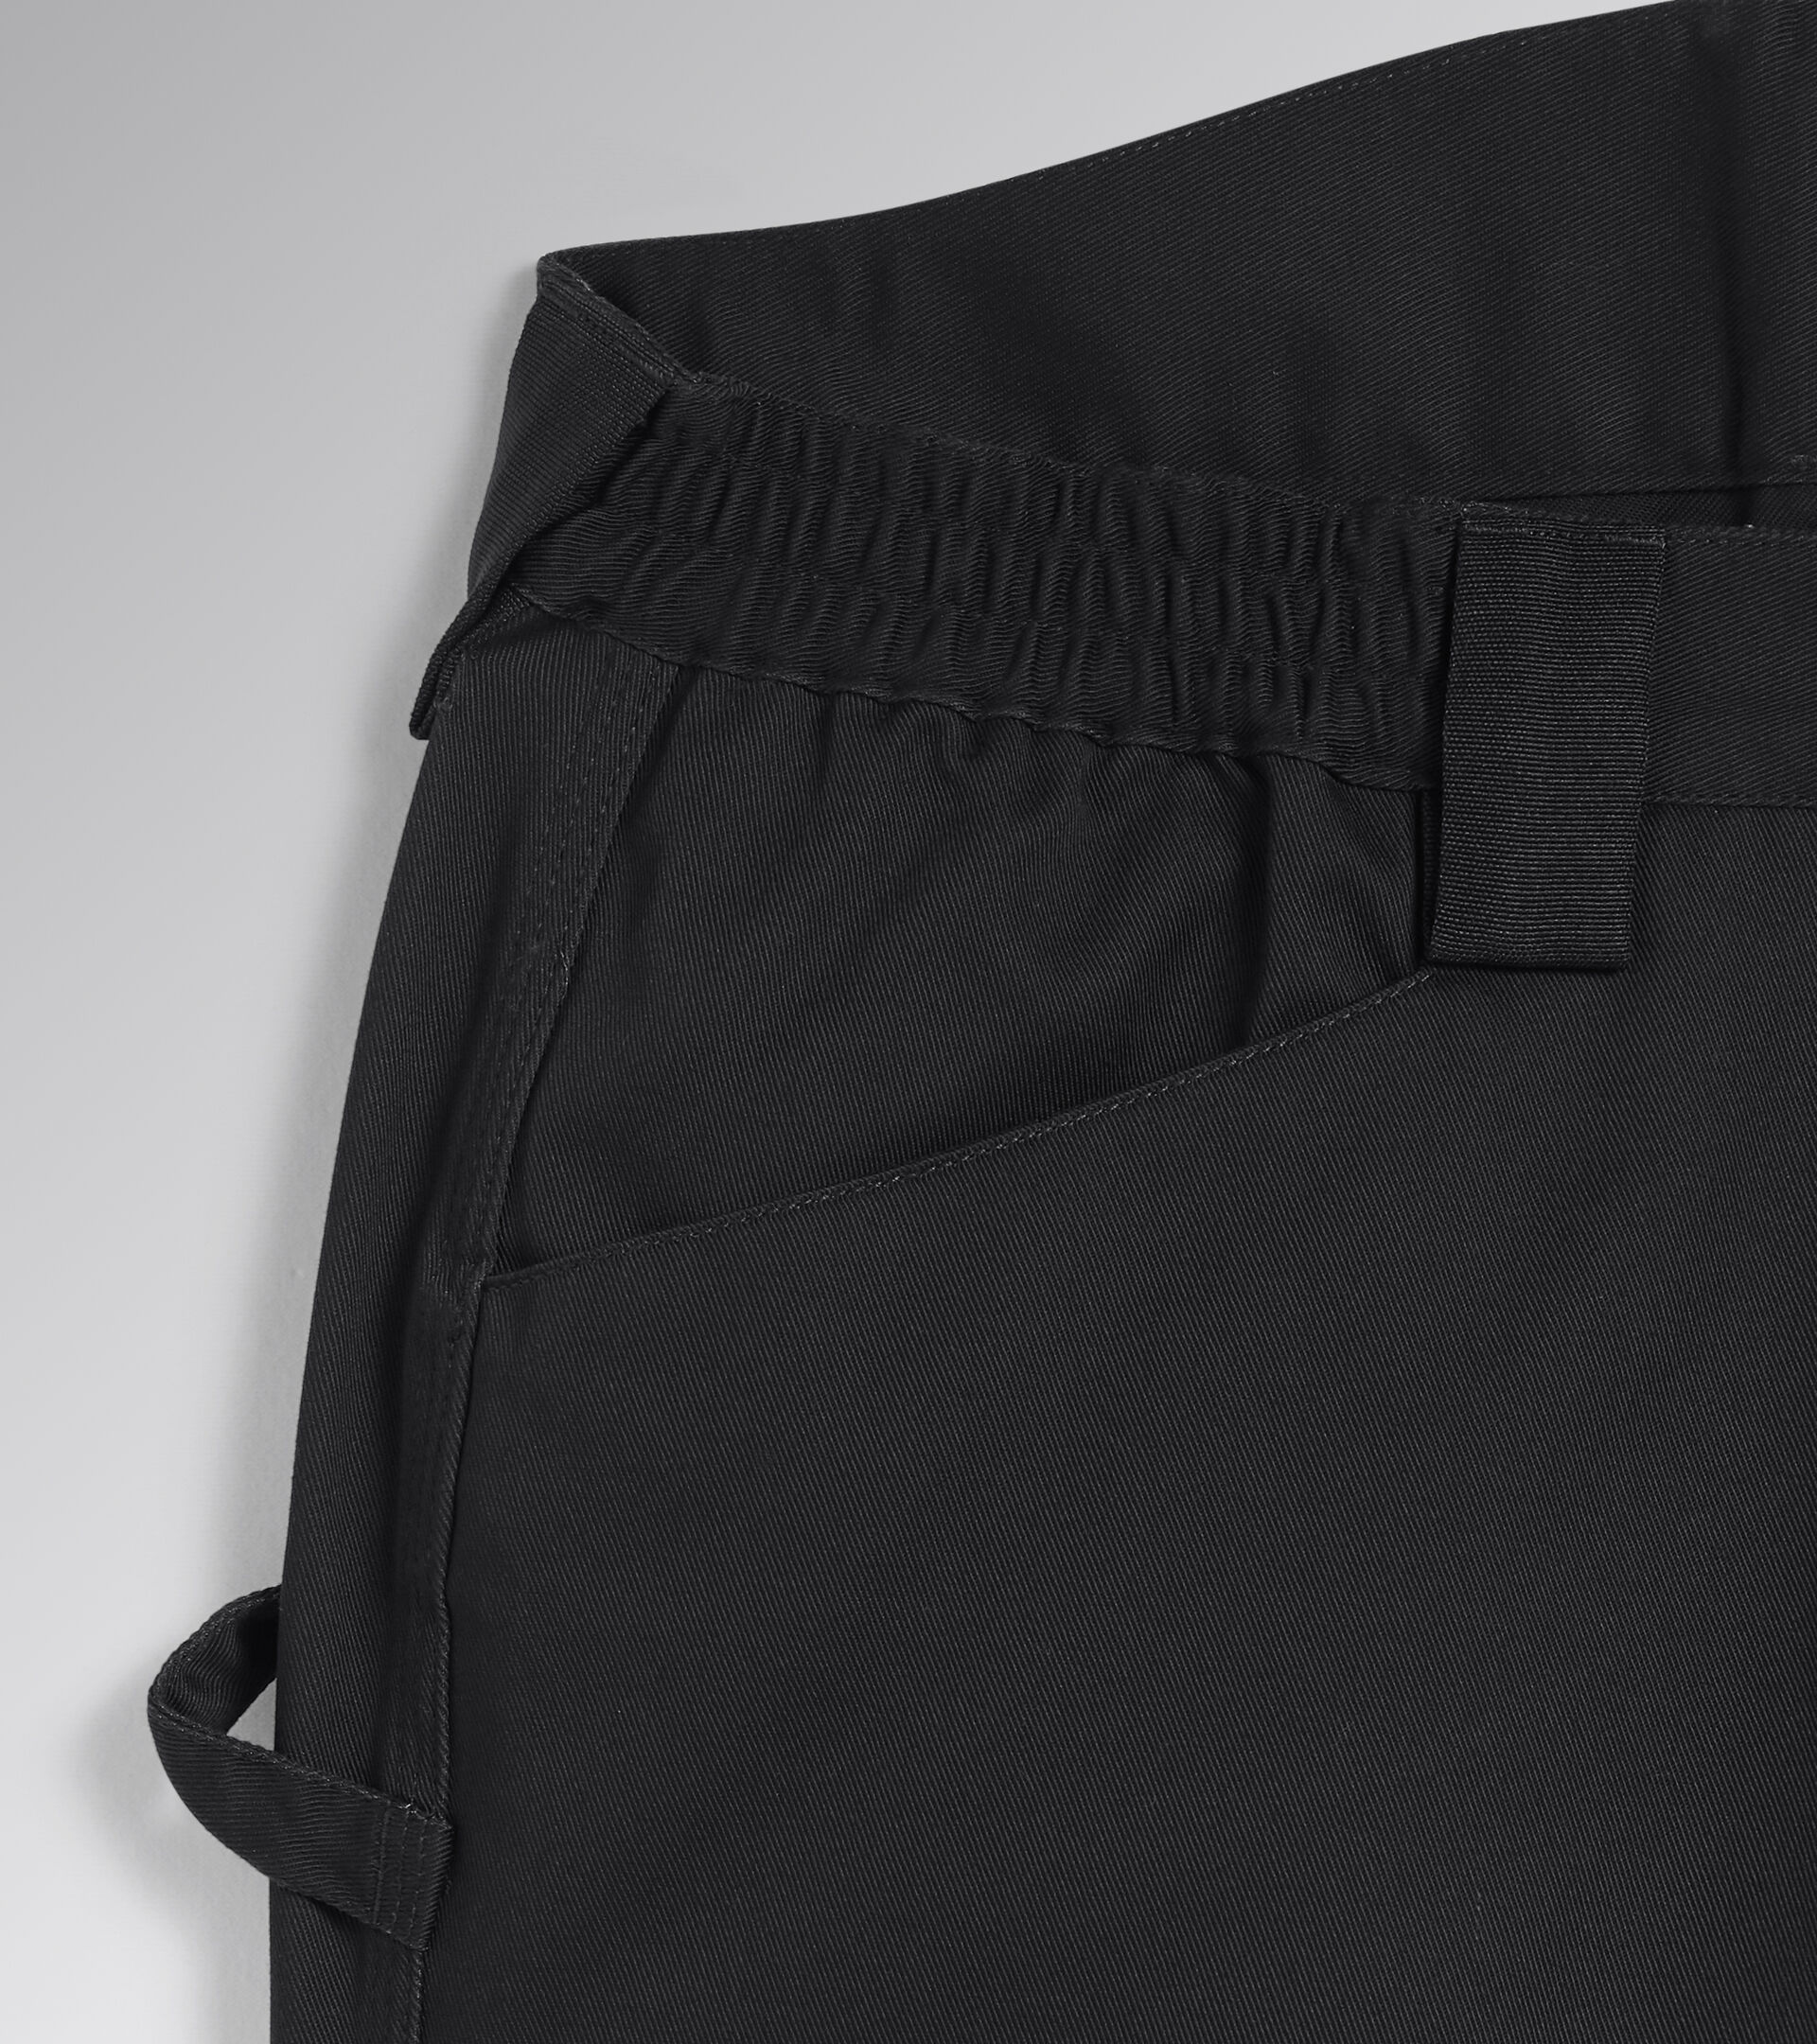 Work trousers PANT ROCK WINTER PERFORMANCE BLACK - Utility